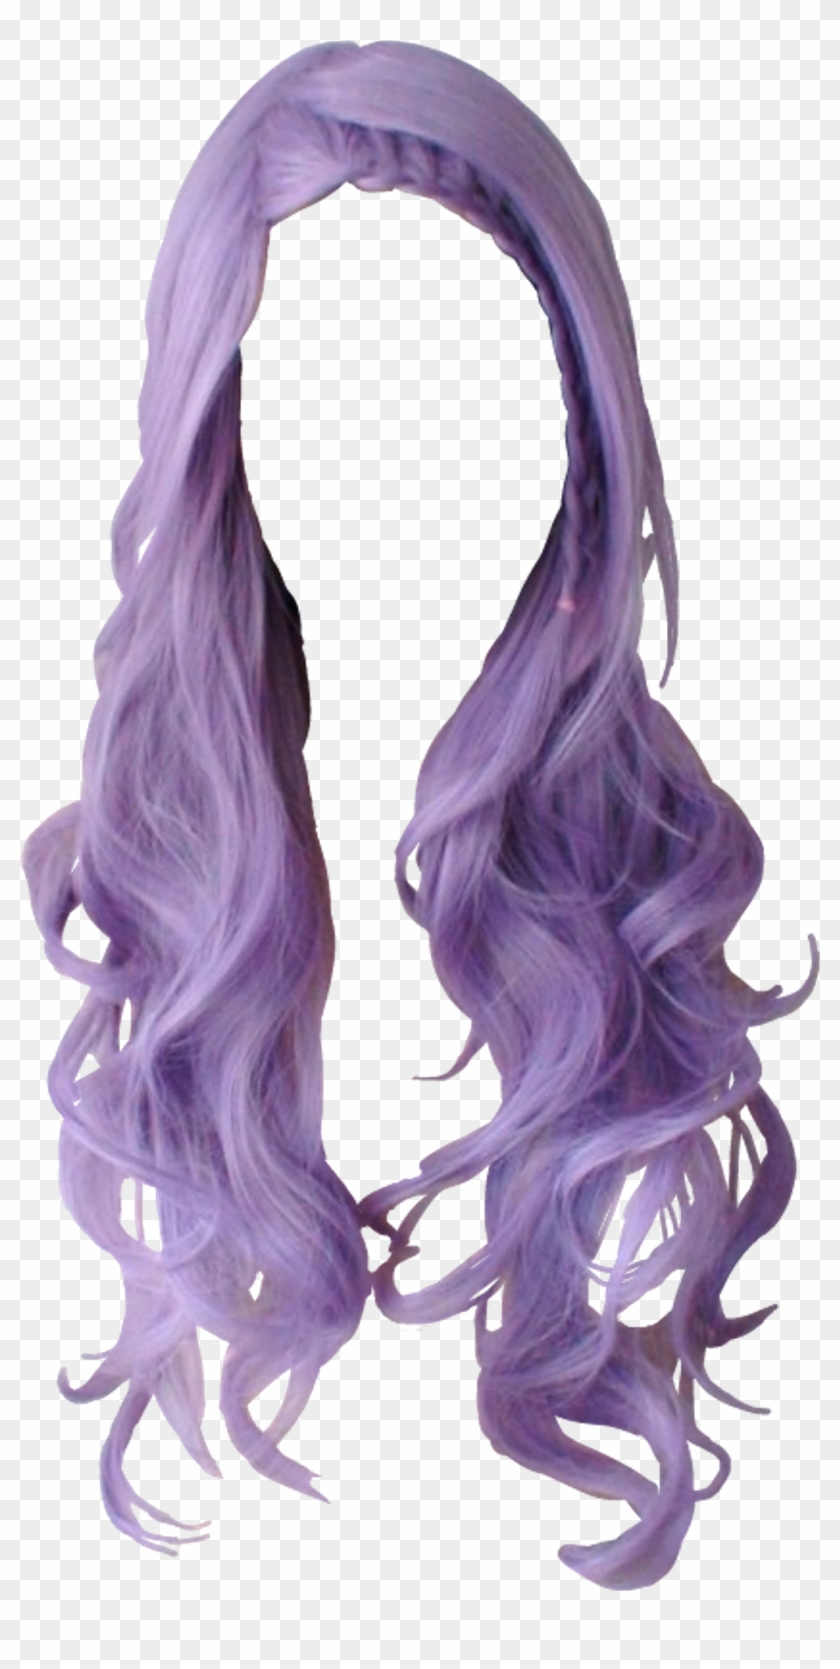 Wig Sticker - Purple Wig Transparent Clipart #463122